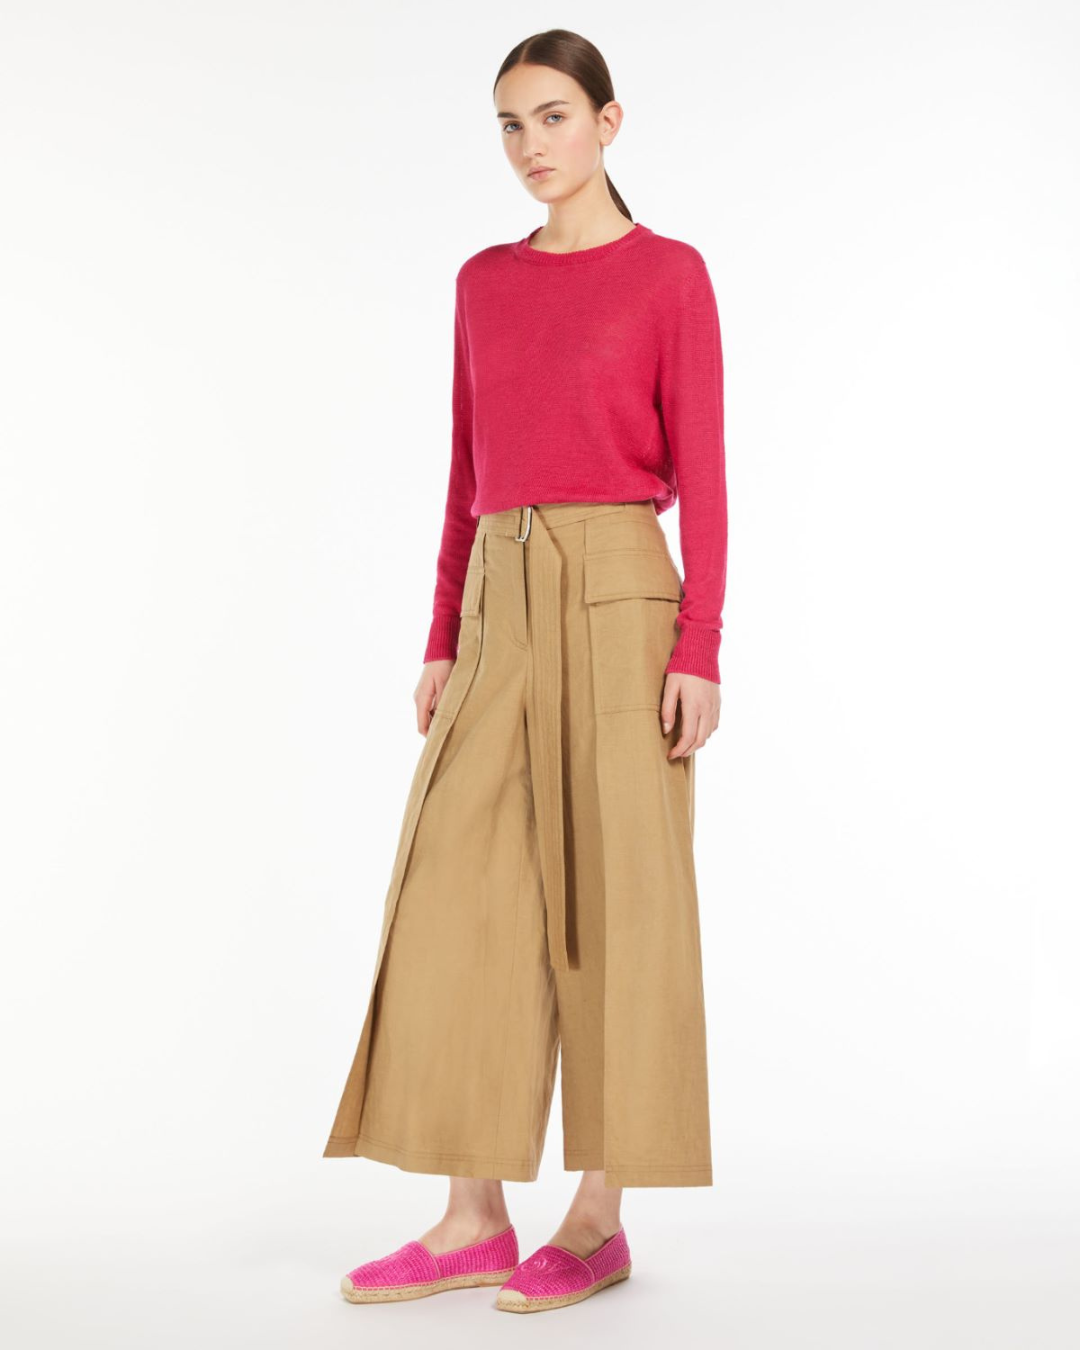 Linen Yarn Sweater - Fuchsia